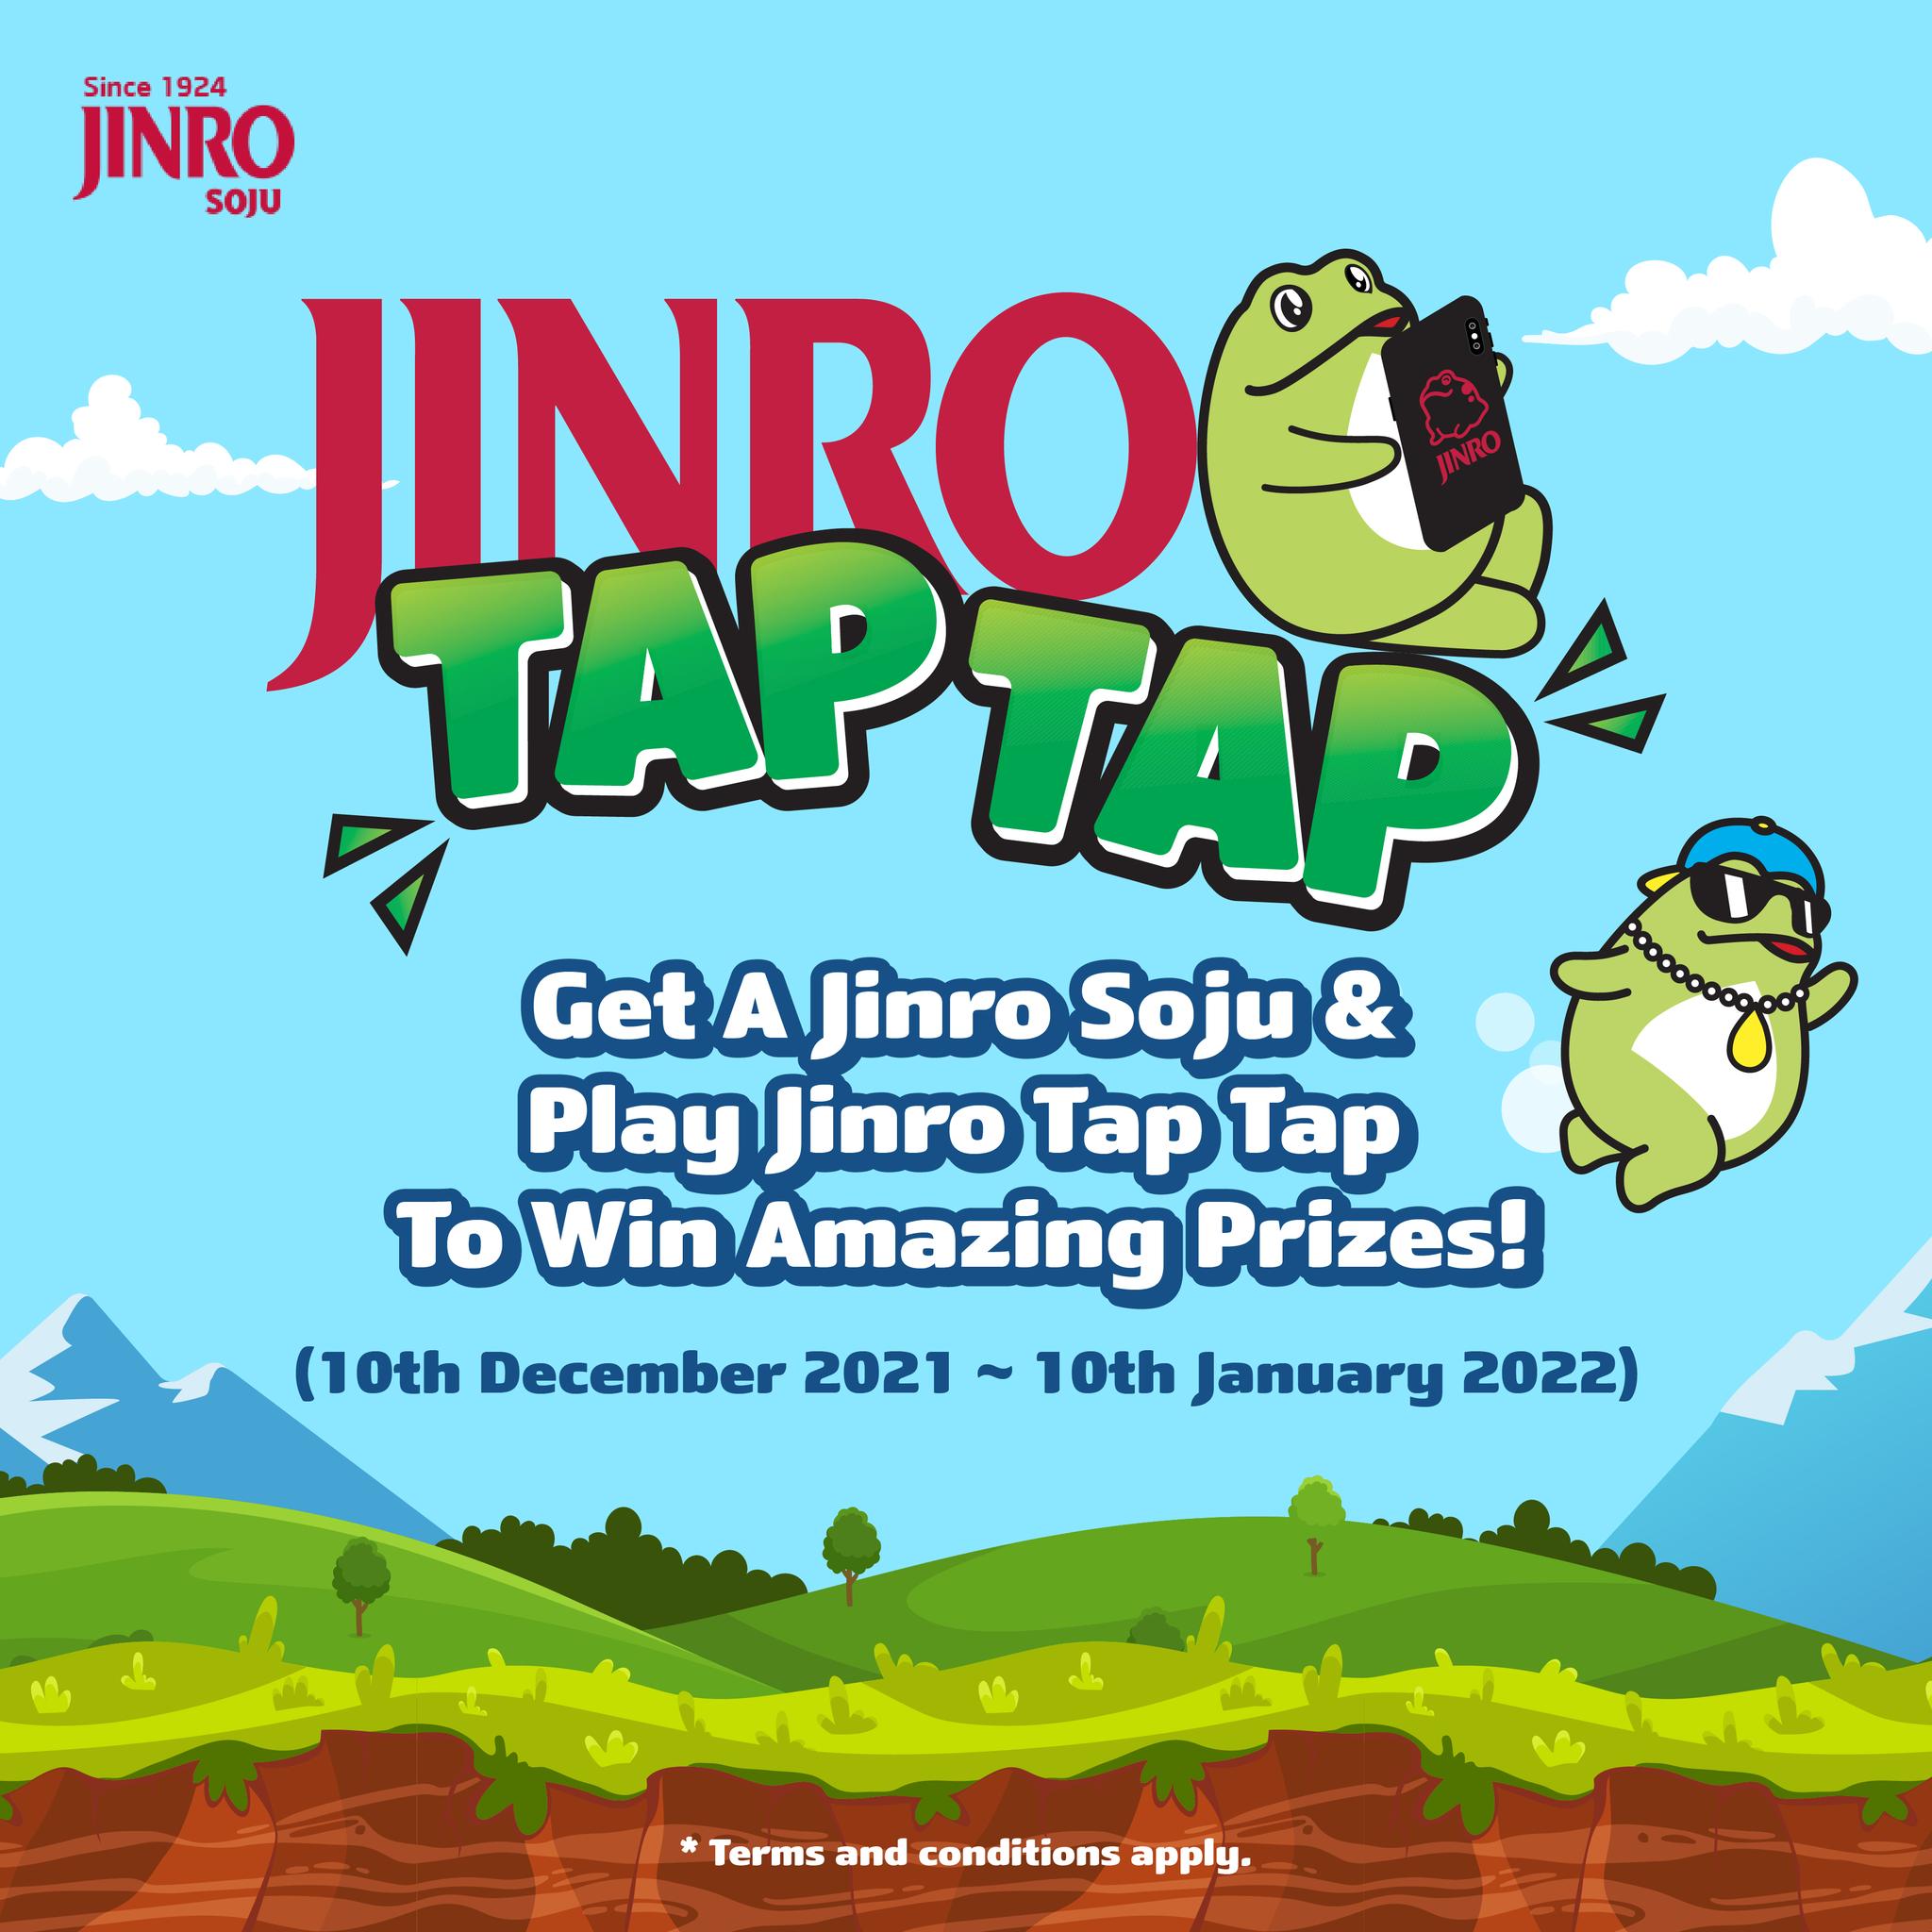 JINRO TAP TAP Contest